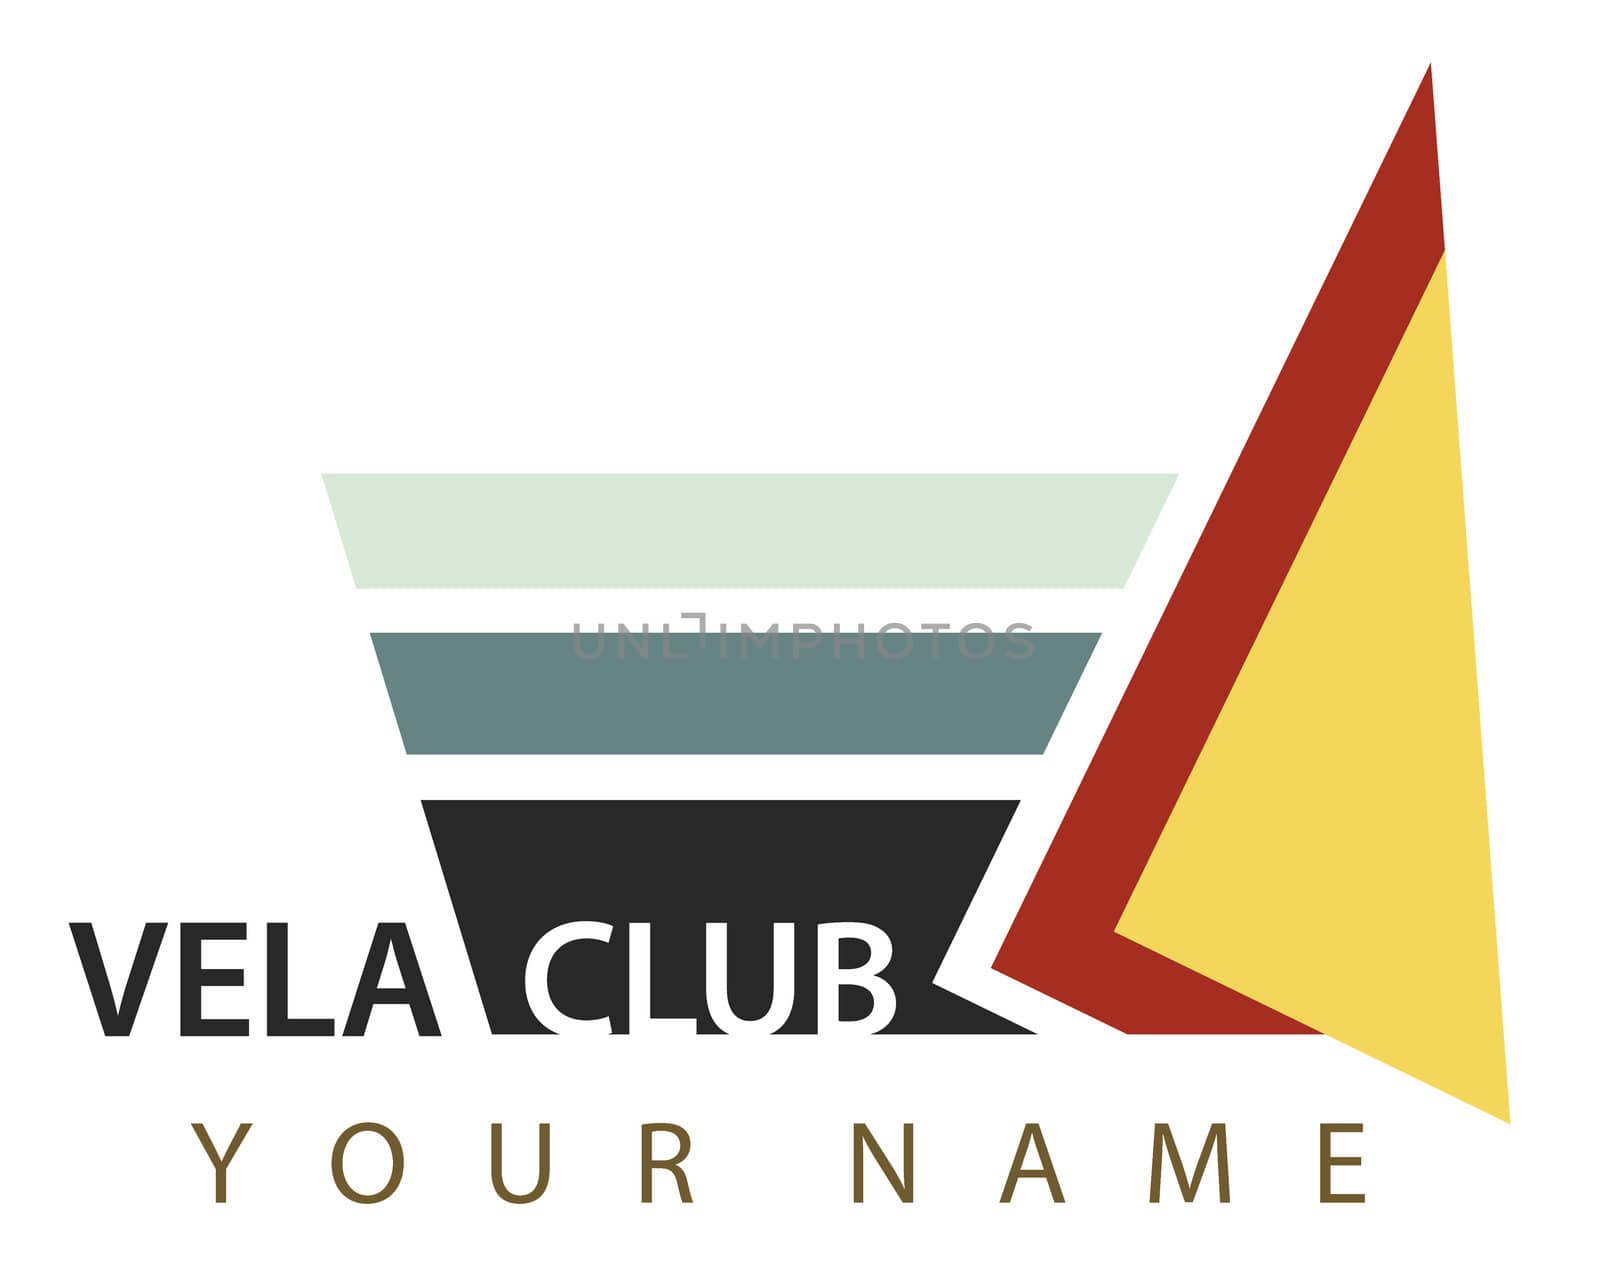 Business logo: Vela club by landon